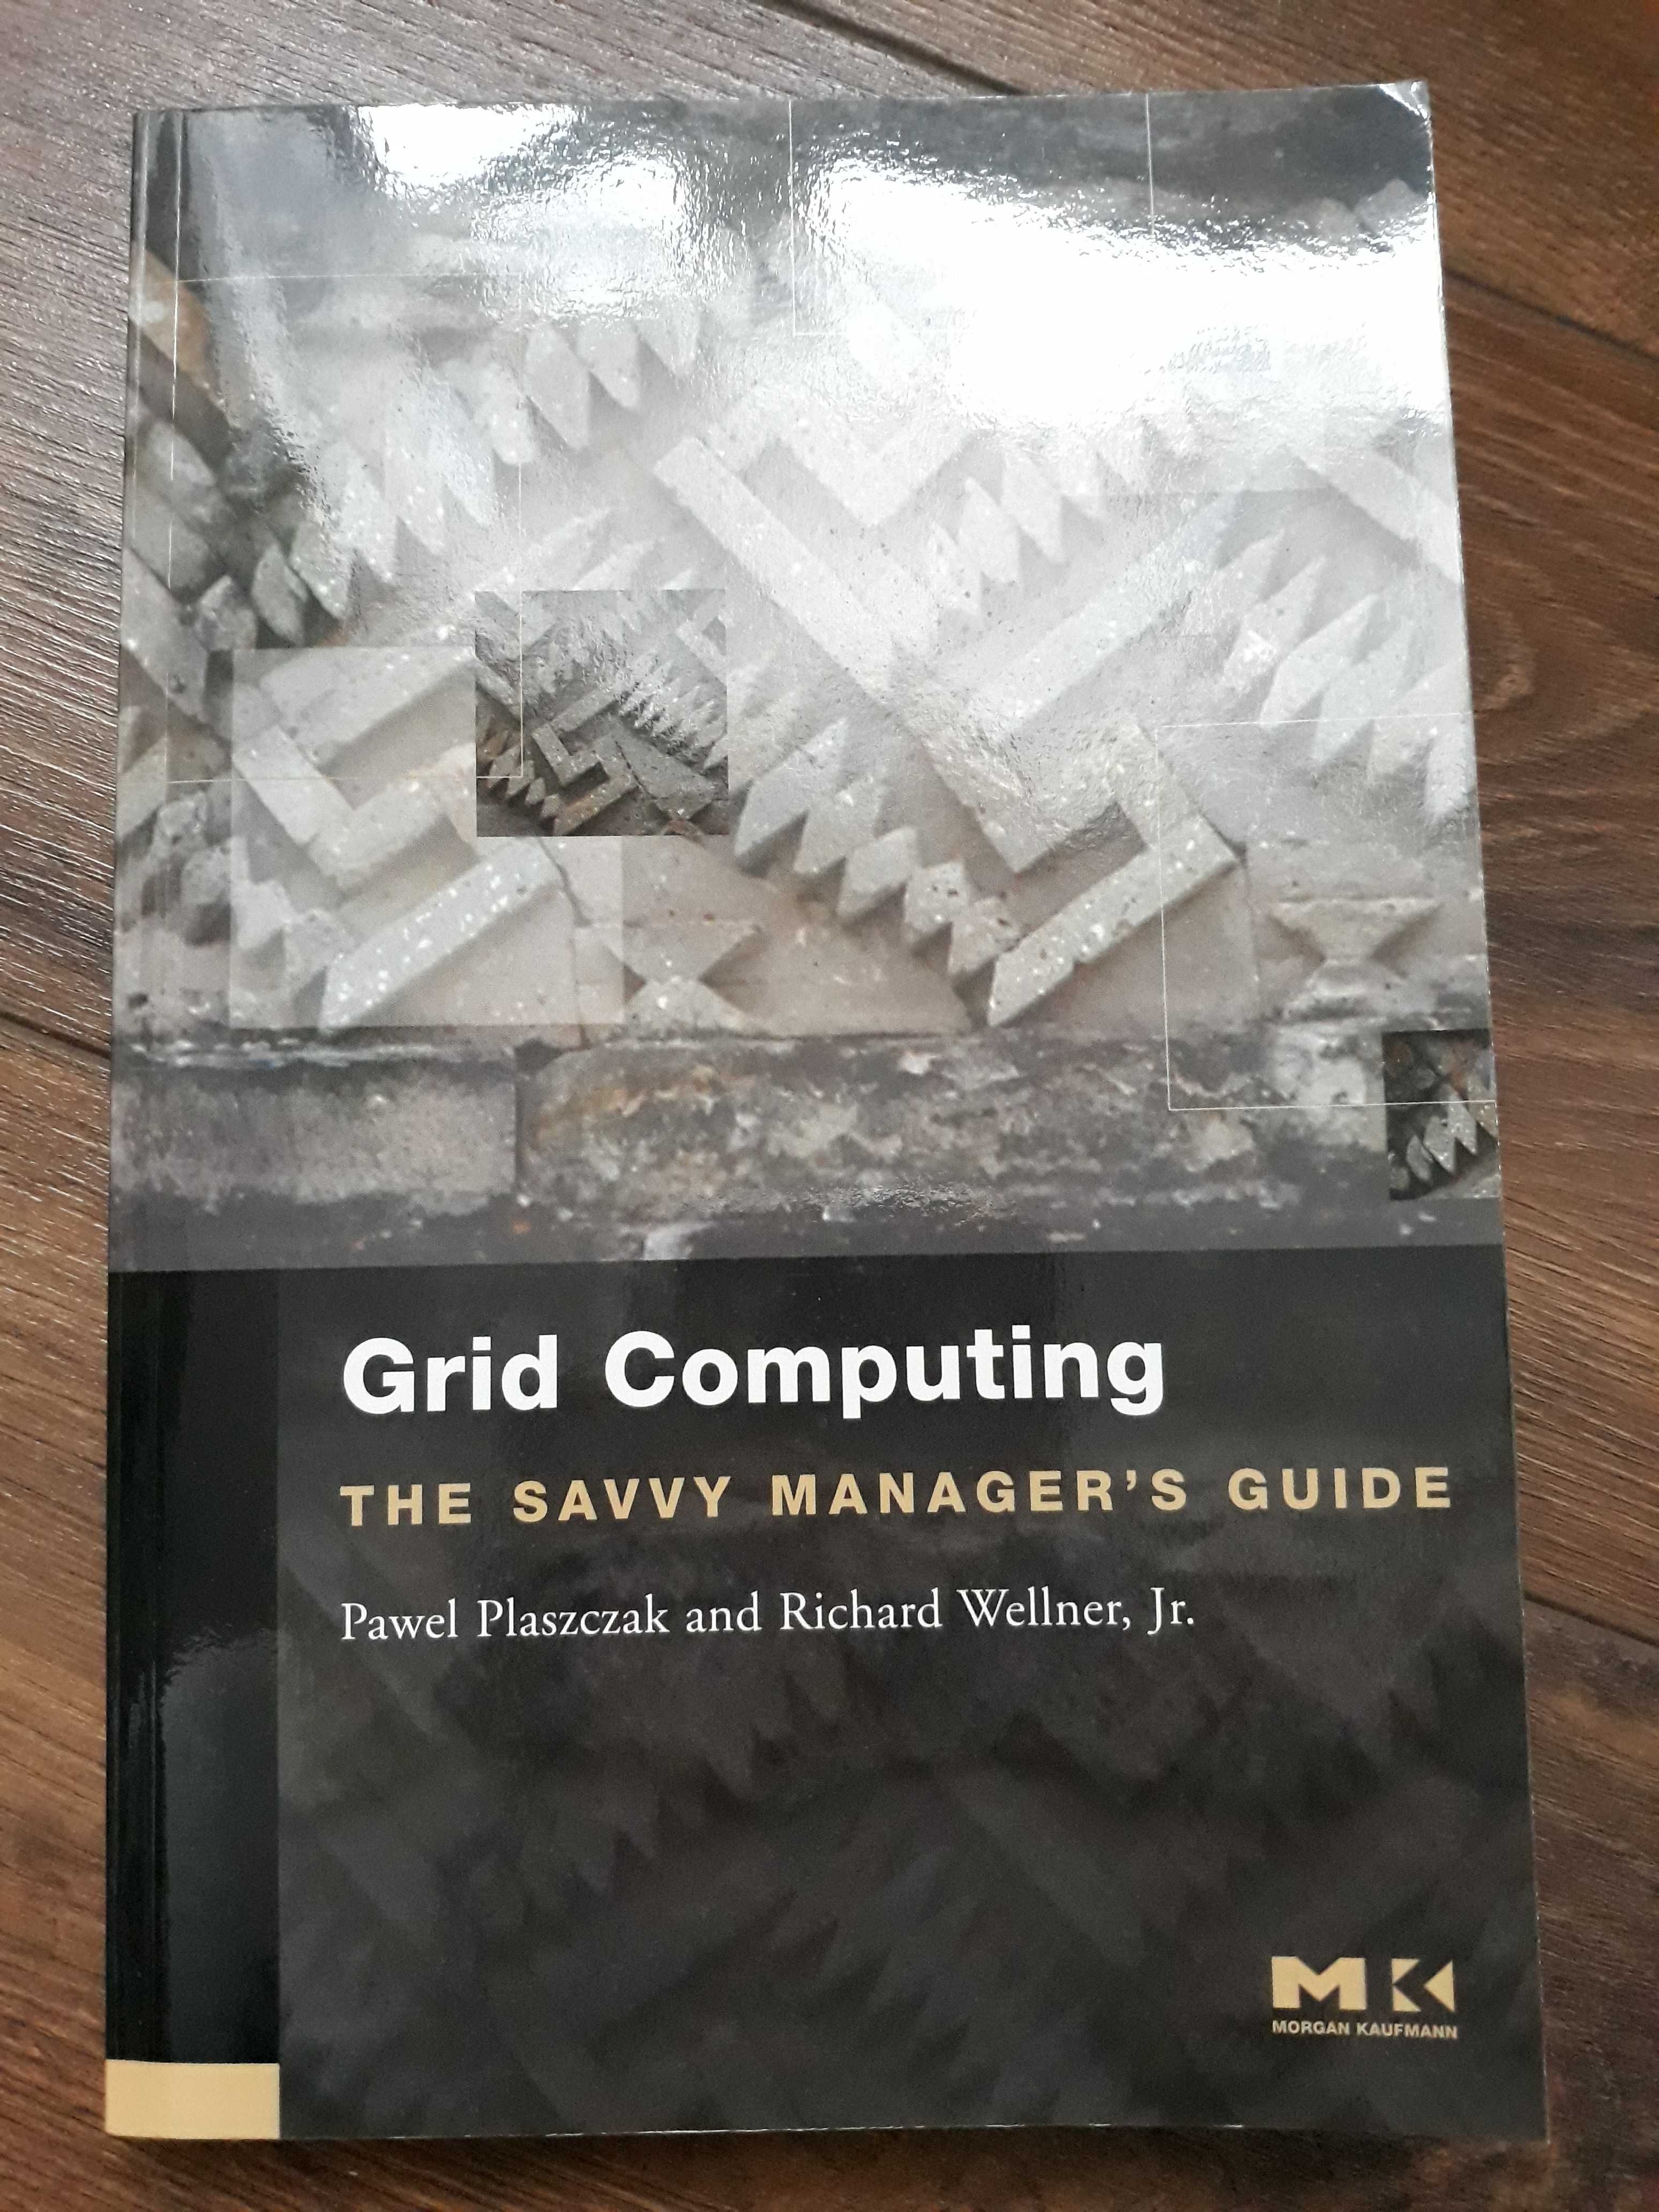 [NOWA] - Grid Computing: The Savvy Manager's Guide, Plaszczak, Wellner